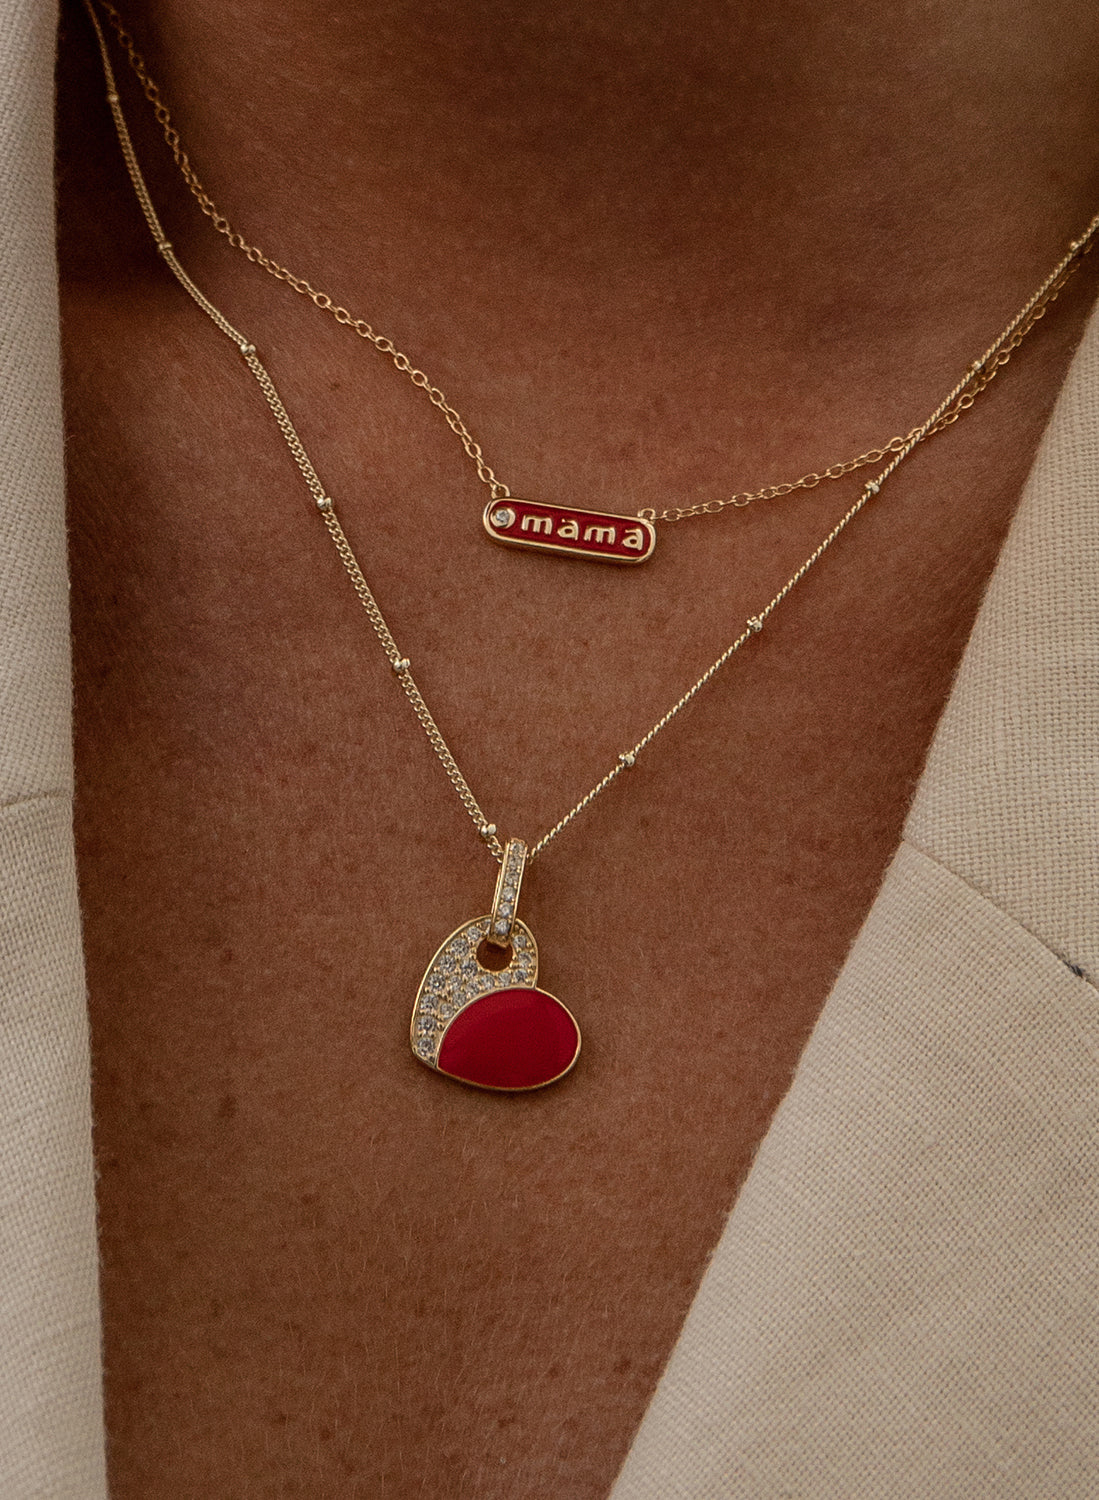 Necklace - Necklaces with enamel heart charm pendants